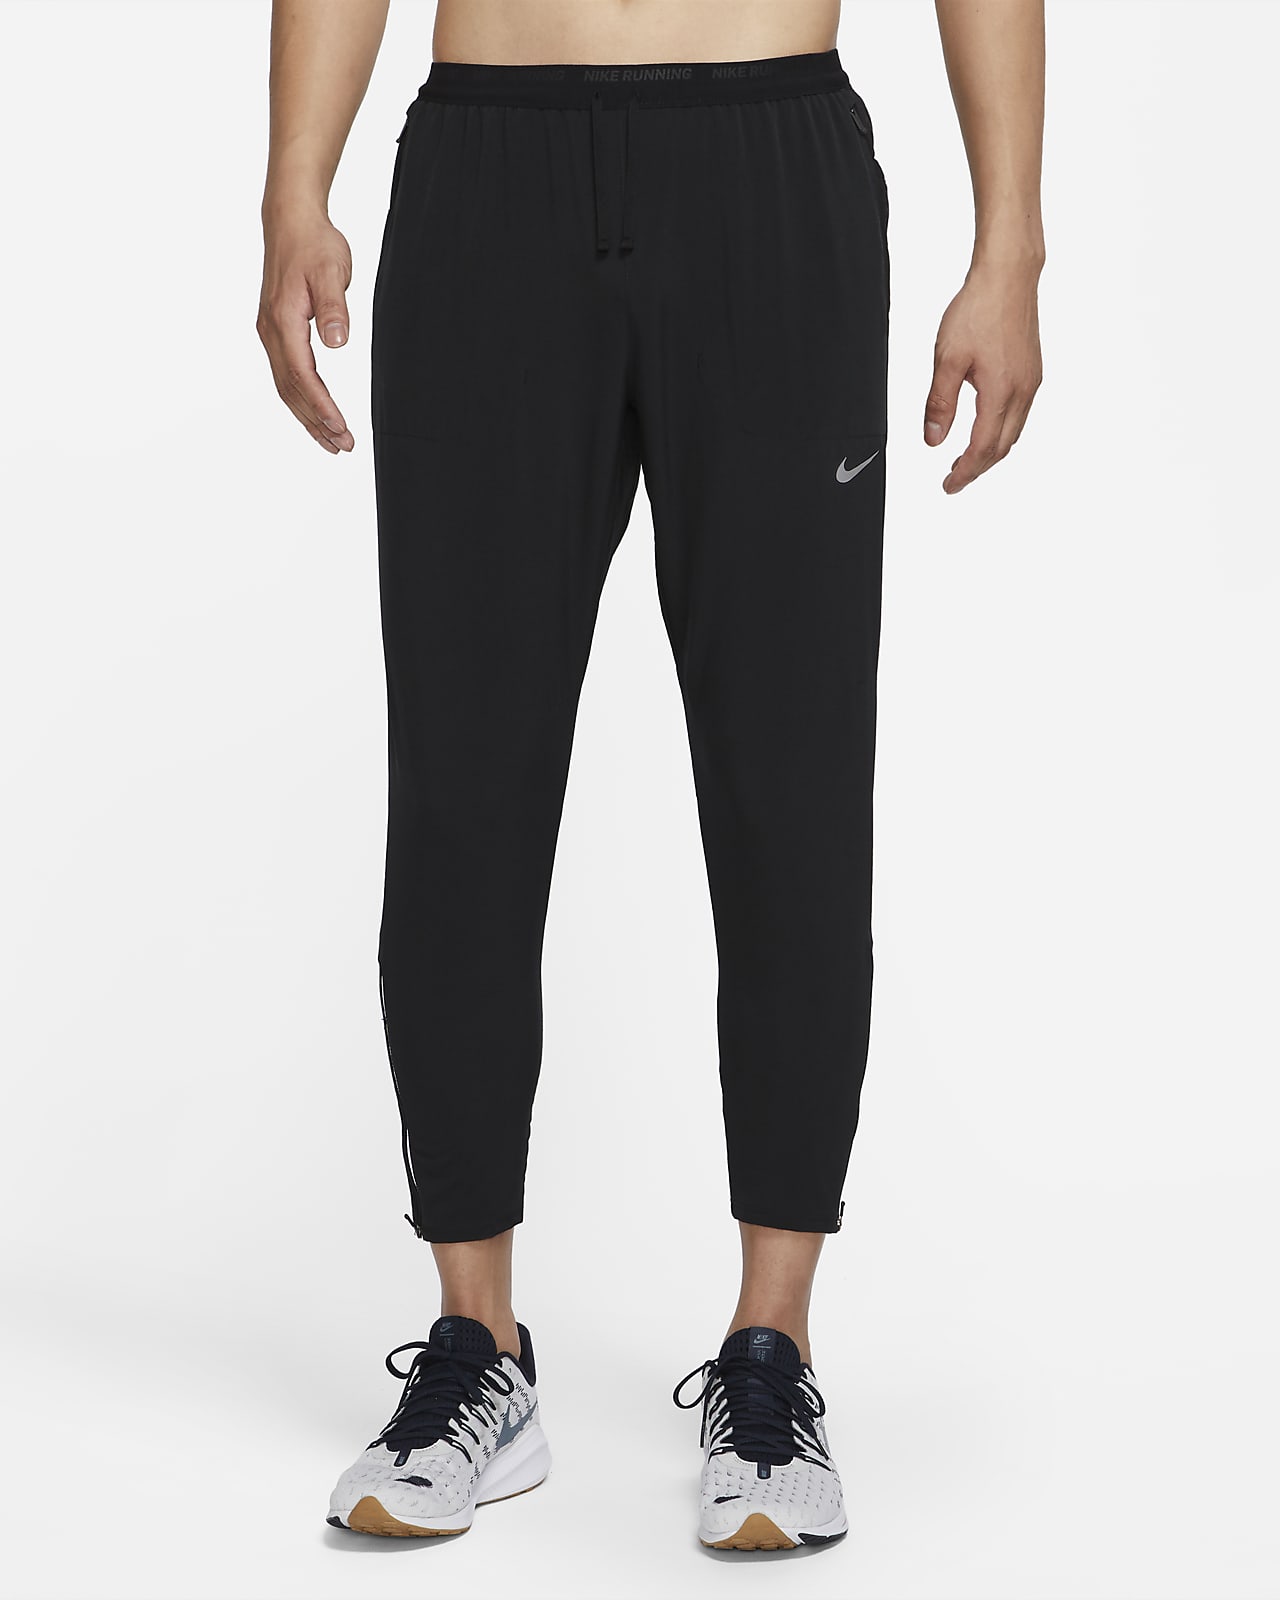 Nike Dri-FIT Phenom Elite 男款梭織跑步長褲